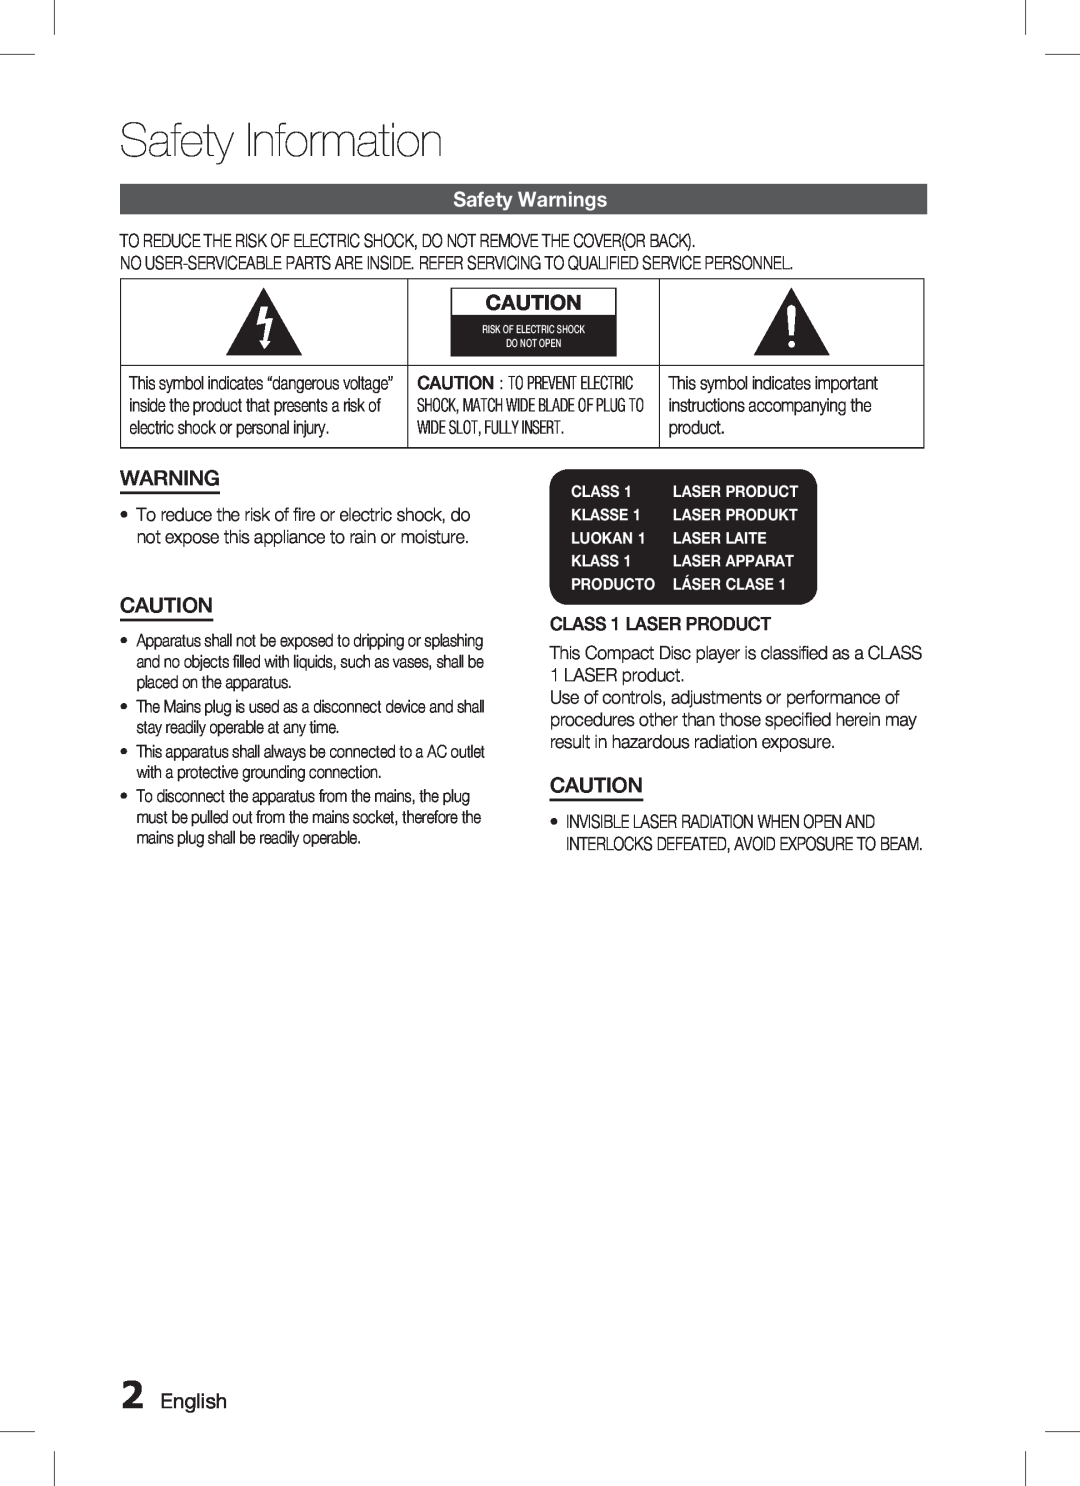 Samsung AH68-02293B Safety Information, Safety Warnings, Class, Klasse, Luokan, Laser Laite, Laser Apparat, Producto 